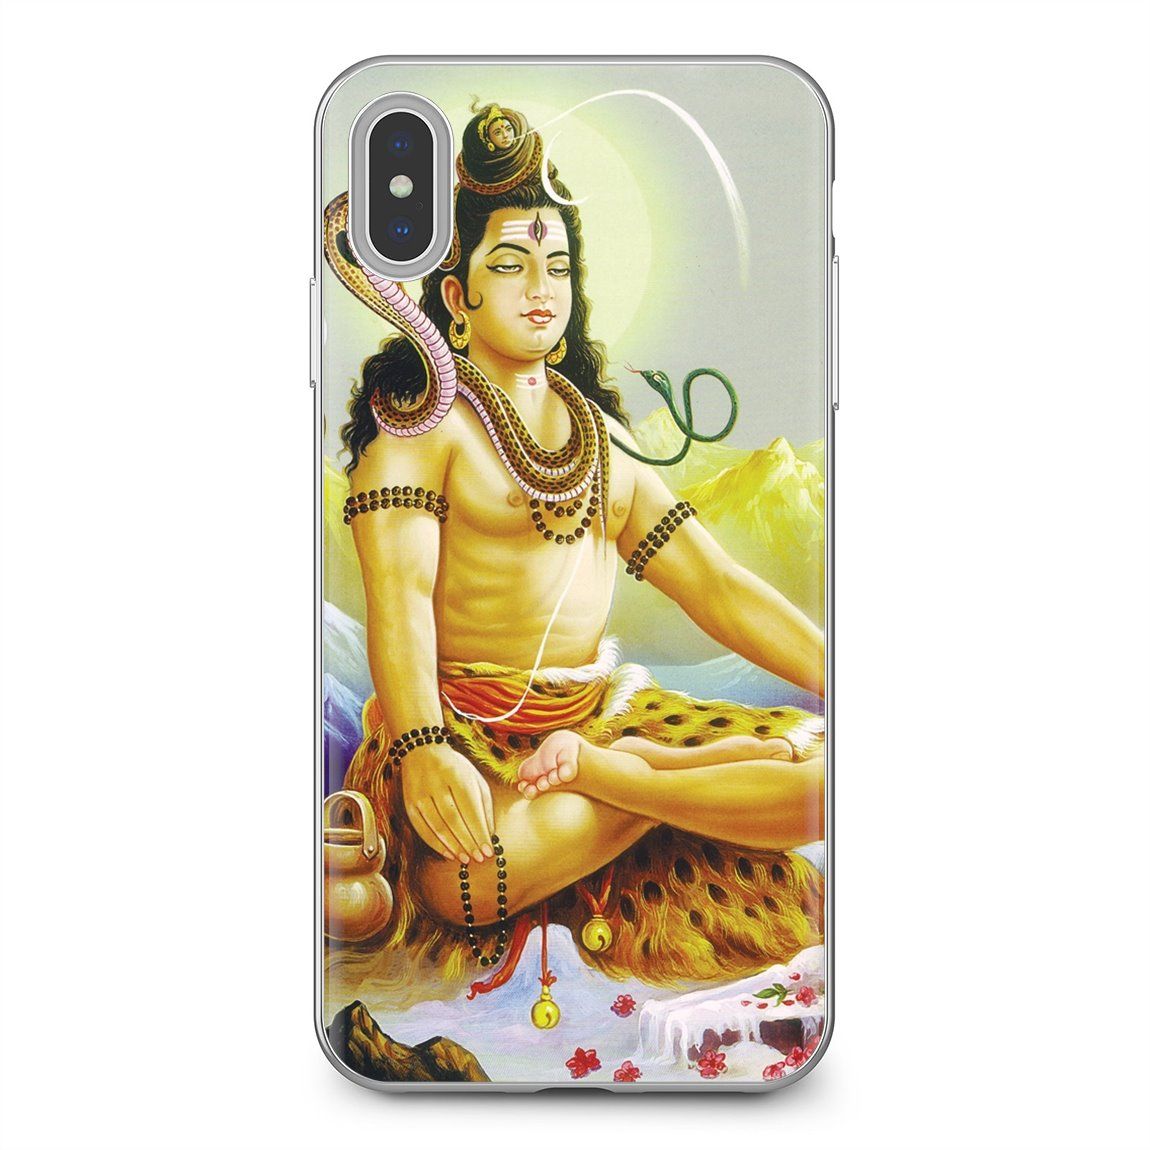 Soft Silicone Case Shiva. Om Namah Shivaya phone wallpaper For Xiaomi Mi A1 A2 A3 5X 6X 8 9 9t Lite SE Pro Mi Max Mix 1 2 3 2S. Fitted Cases